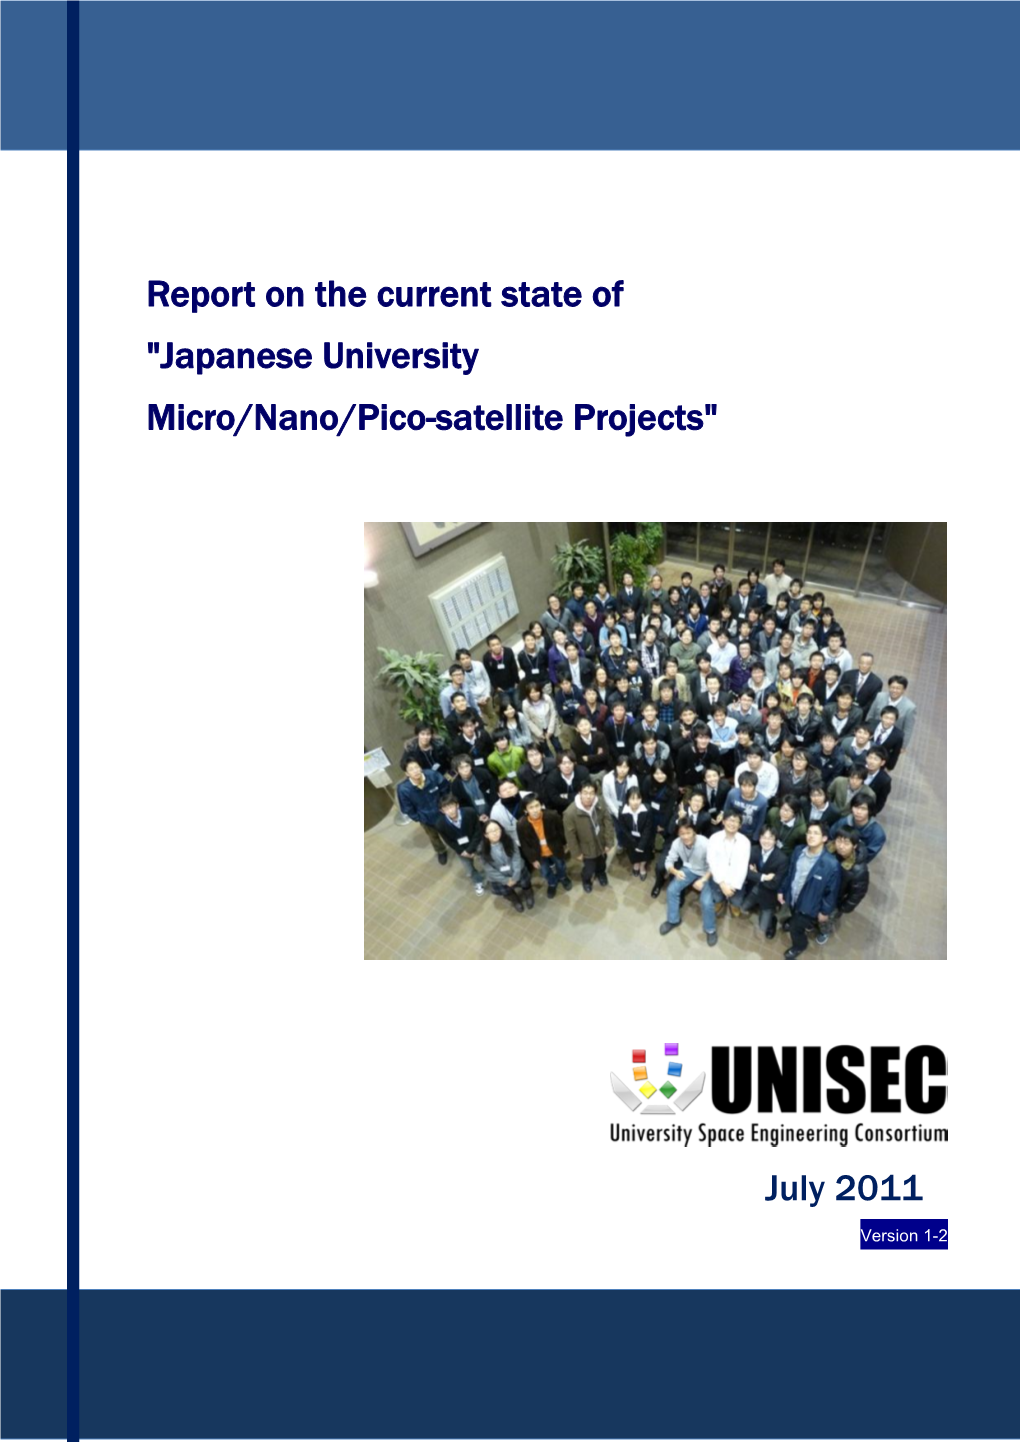 Japanese University Micro/Nano/Pico-Satellite Projects"